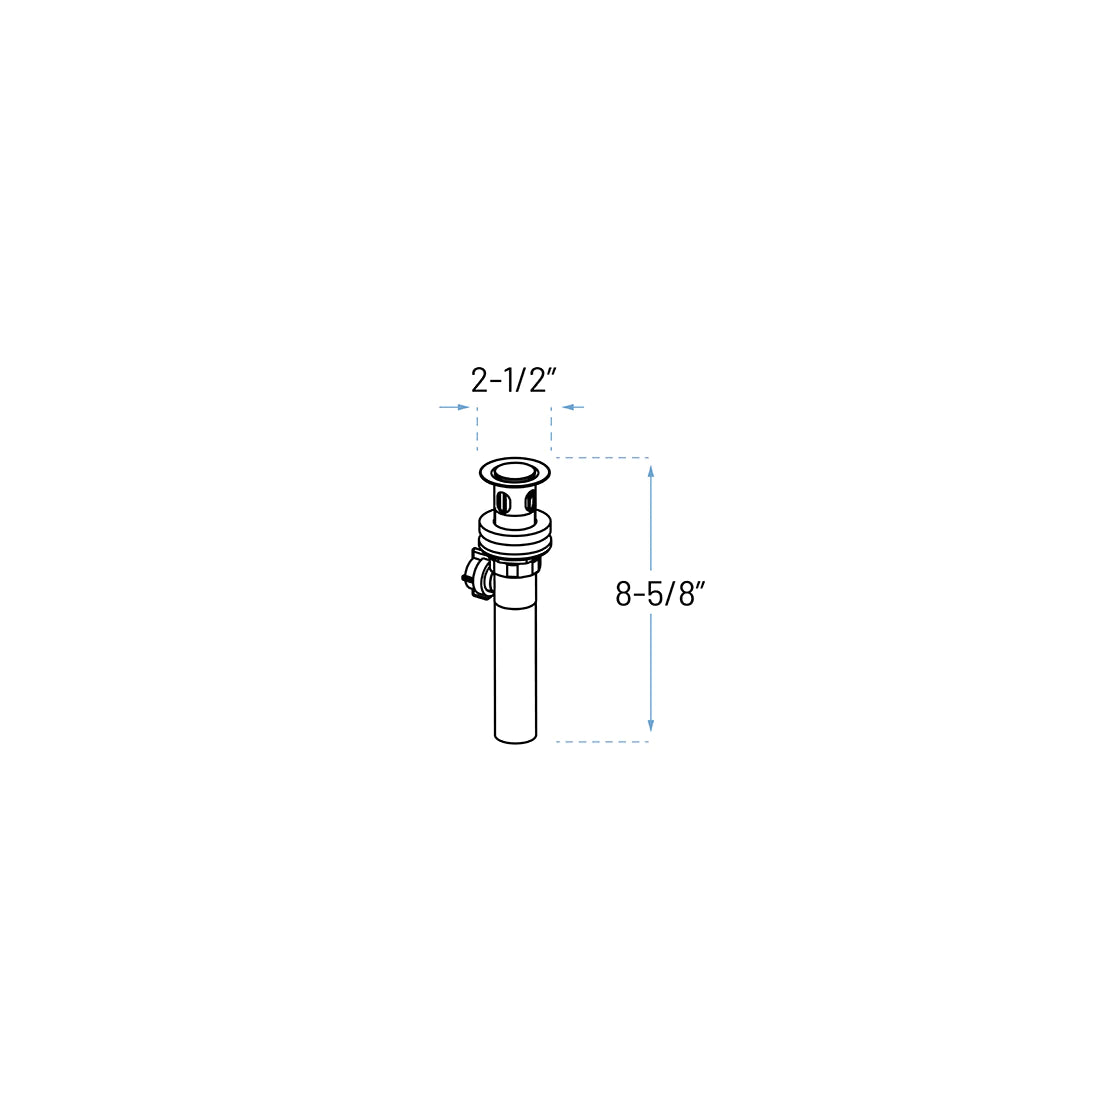 A-7005-BL Single Handle Bathroom Faucet